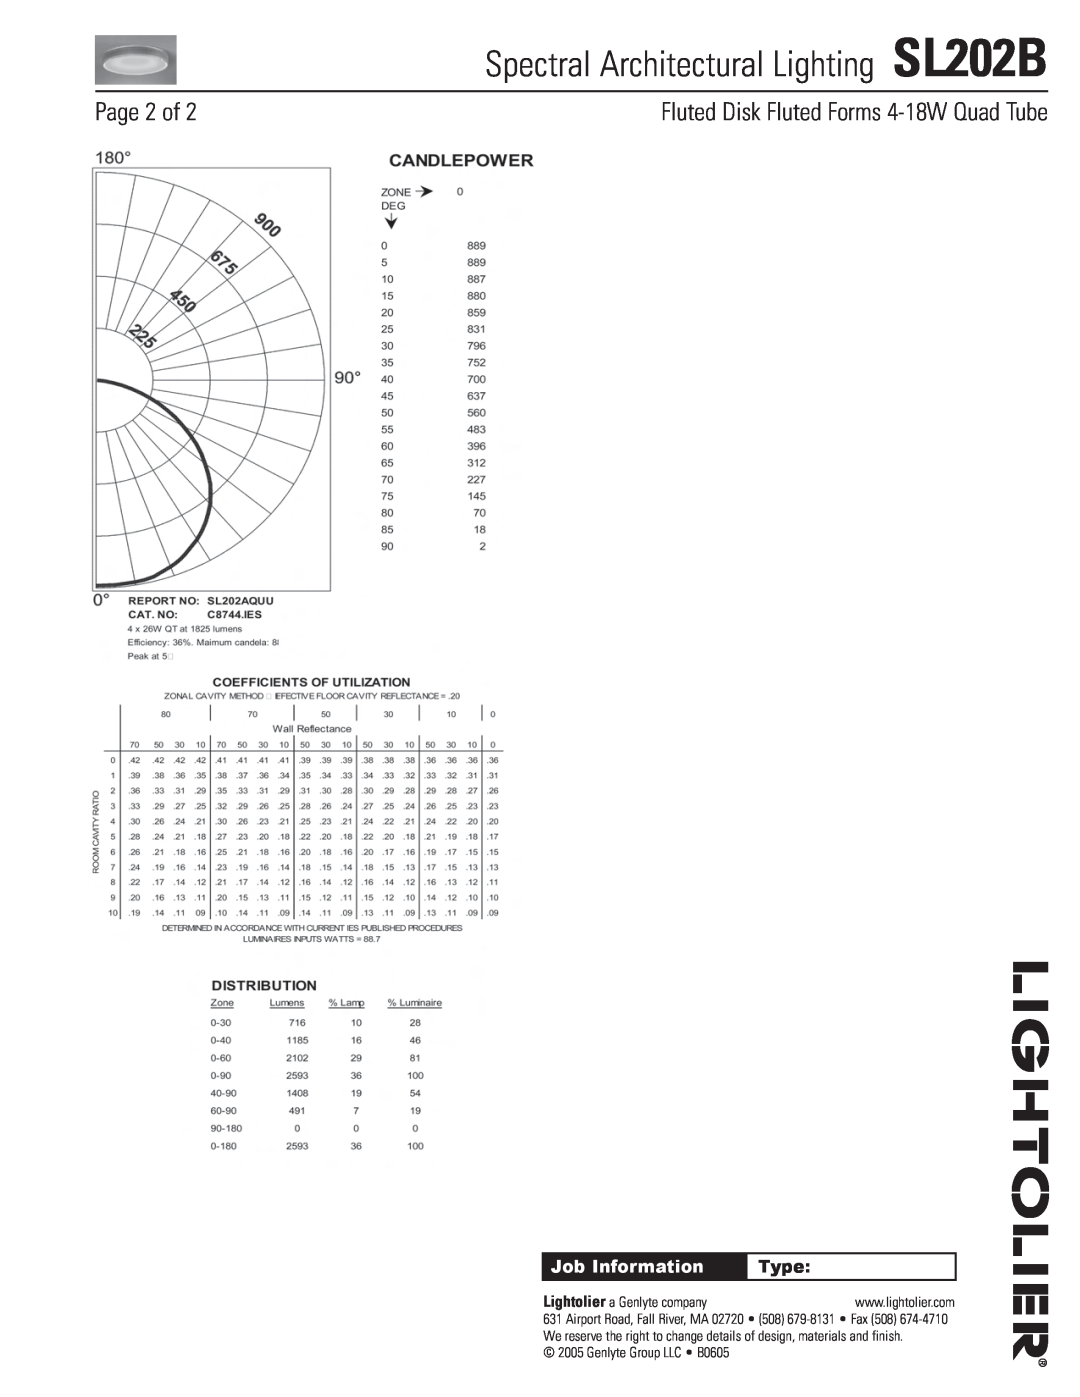 Lightolier Page 2 of, Spectral Architectural Lighting SL202B, Fluted Disk Fluted Forms 4-18WQuad Tube, Job Information 